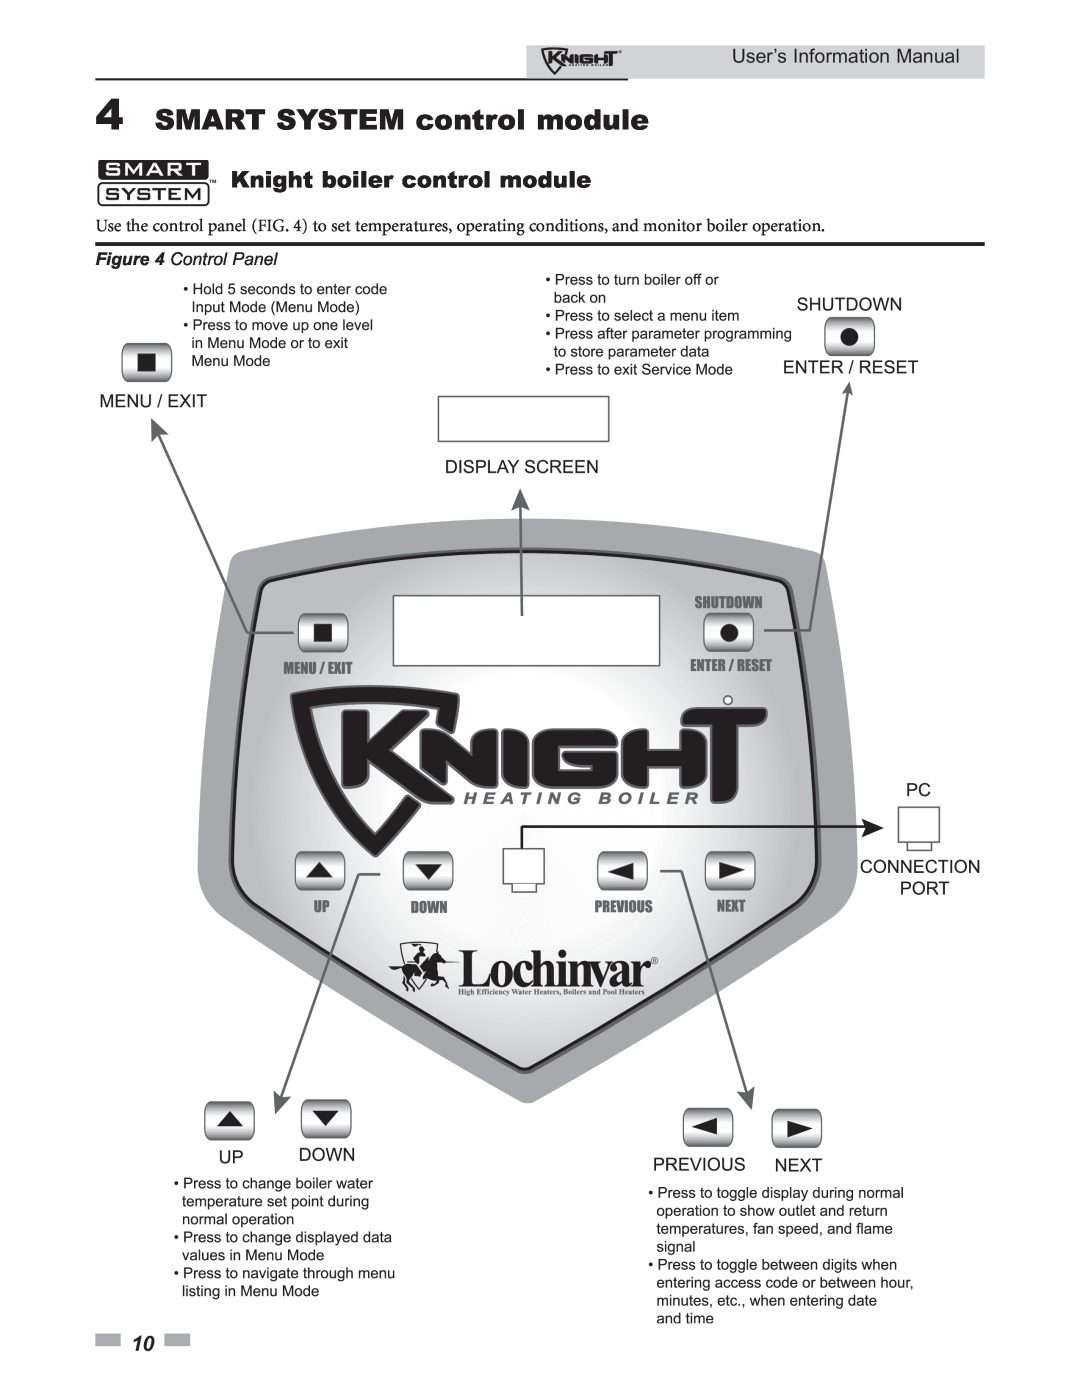 Lochinvar 80 - 285 SMART SYSTEM control module, Knight boiler control module, Control Panel, User’s Information Manual 